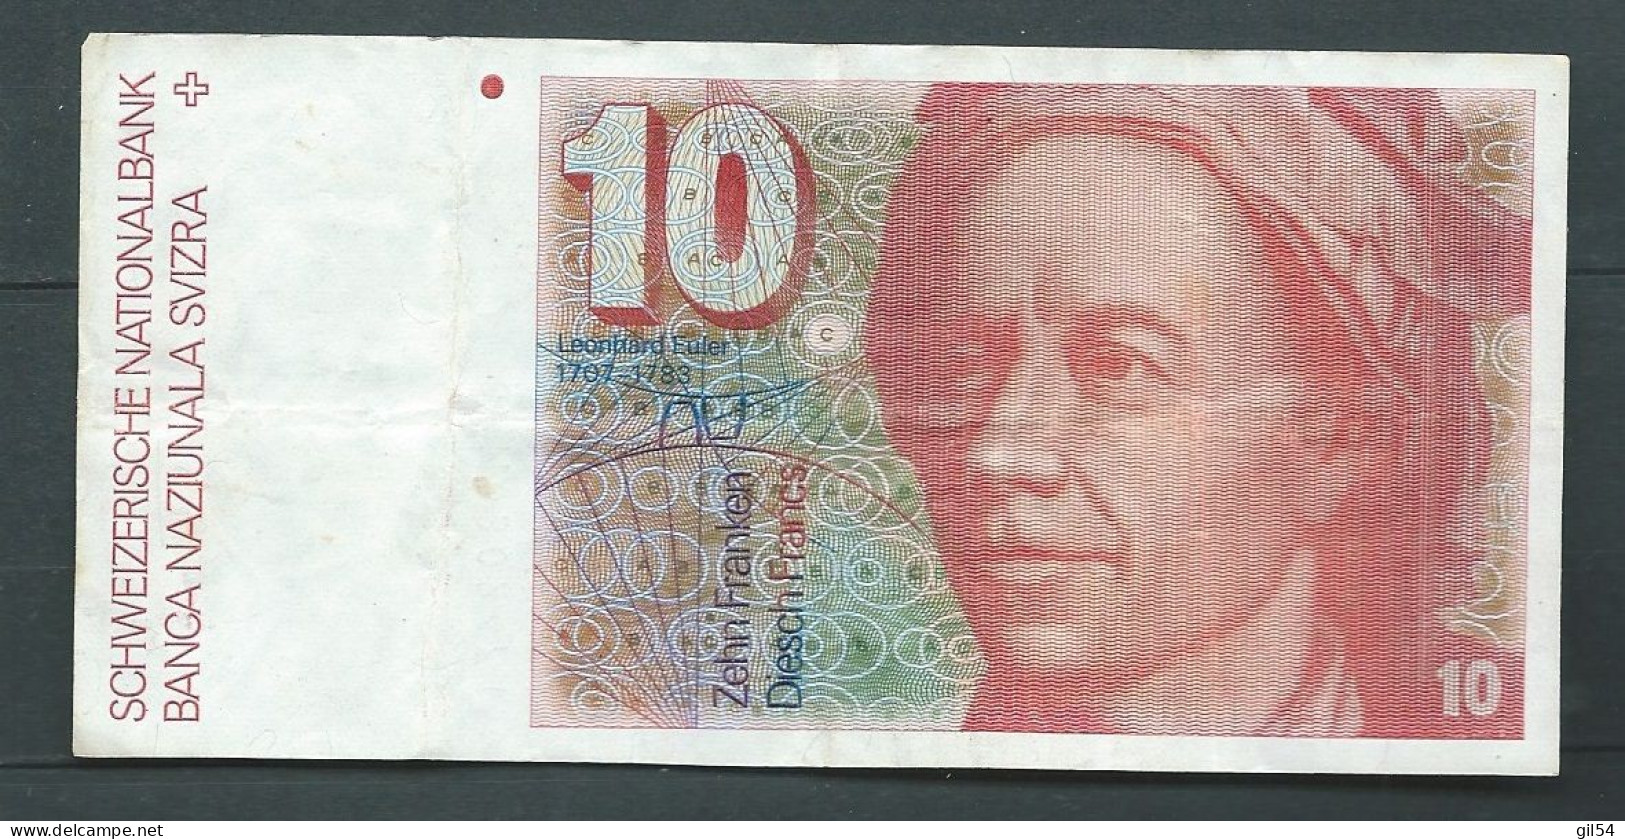 Billet 10 Francs 1987 Svizzera Suisse Schweiz 80M0302471  --  Laura14328 - Suiza